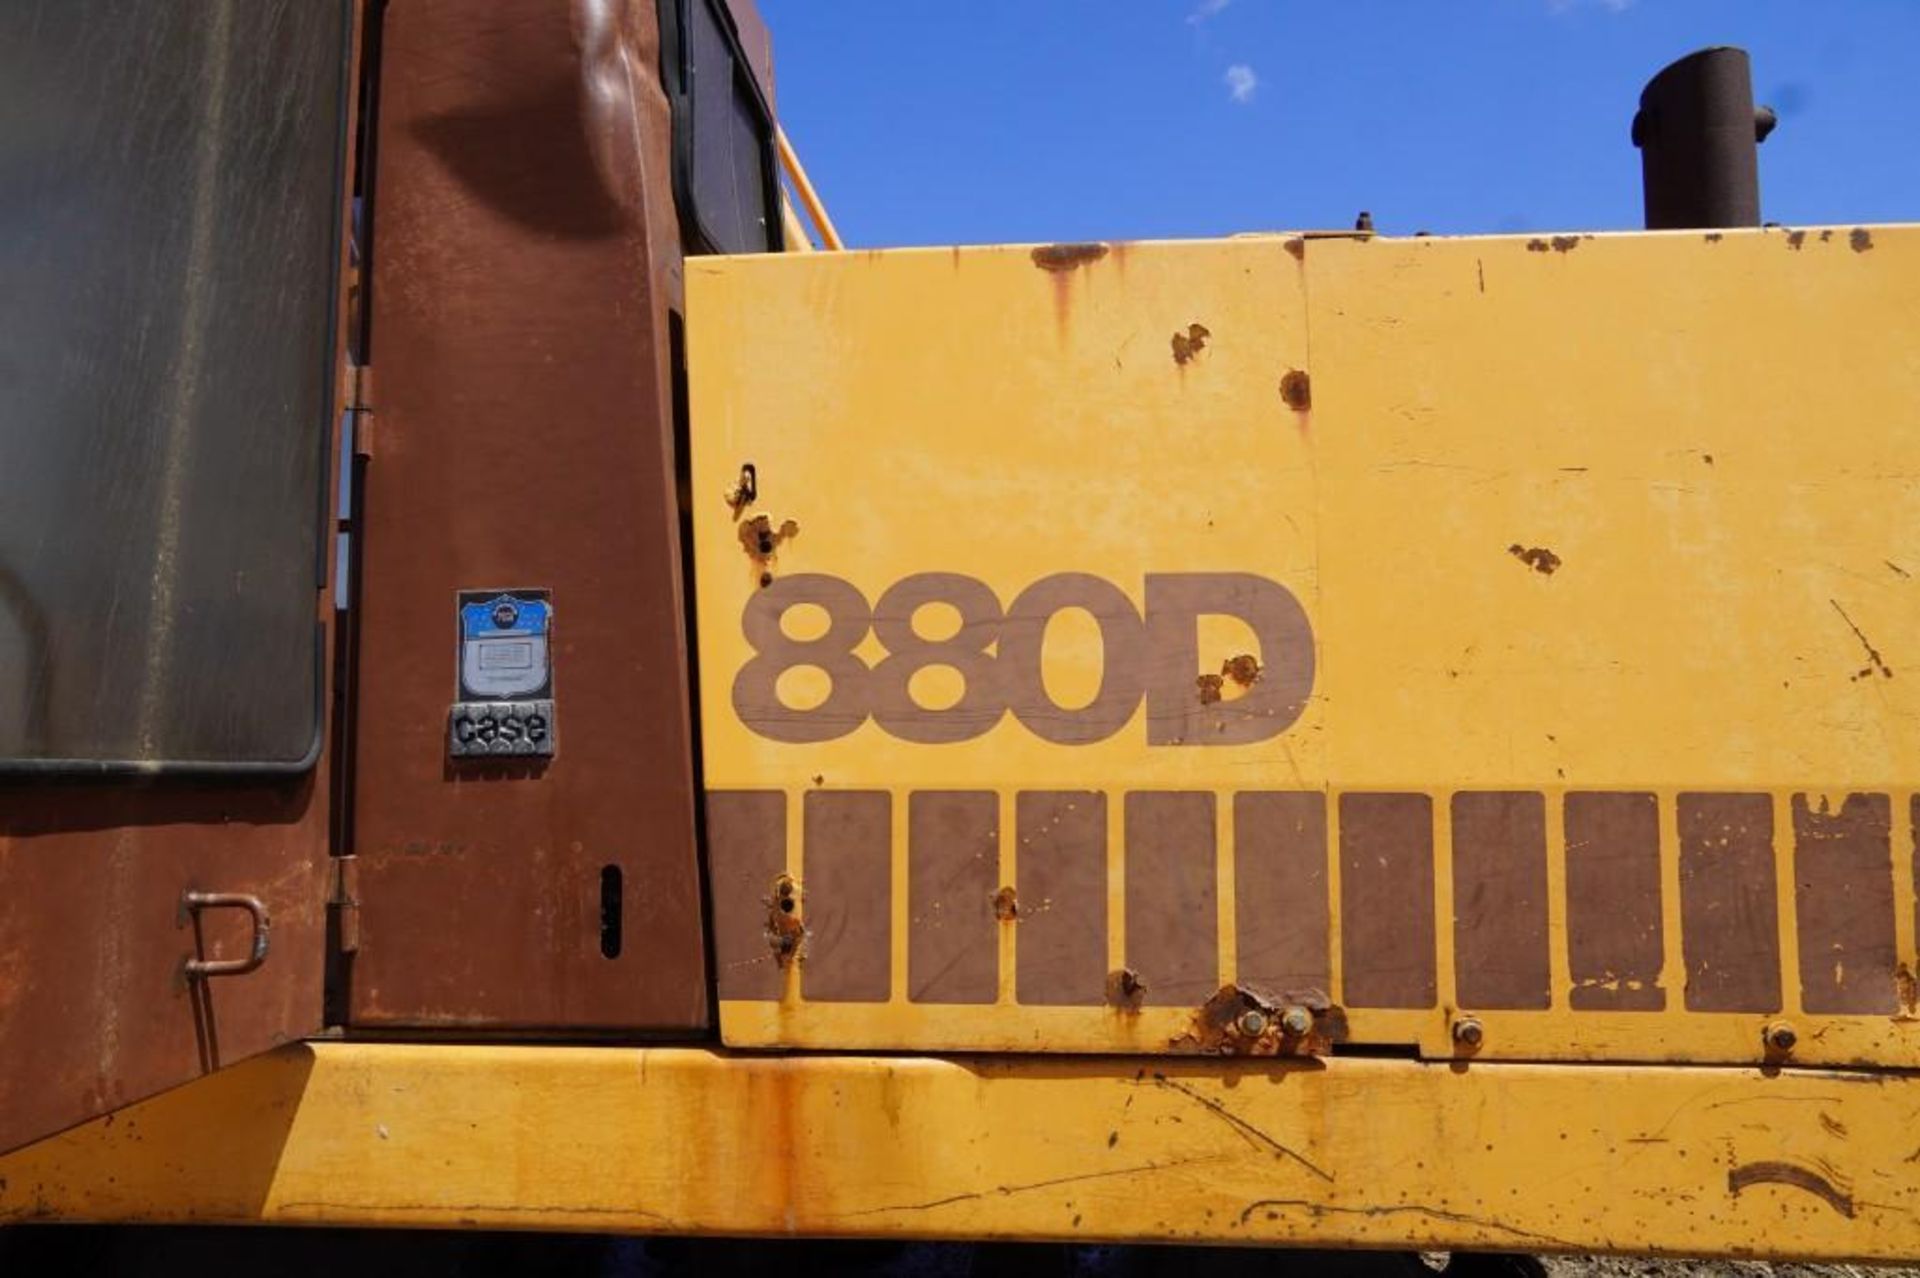 Case 880D Excavator - Image 11 of 53